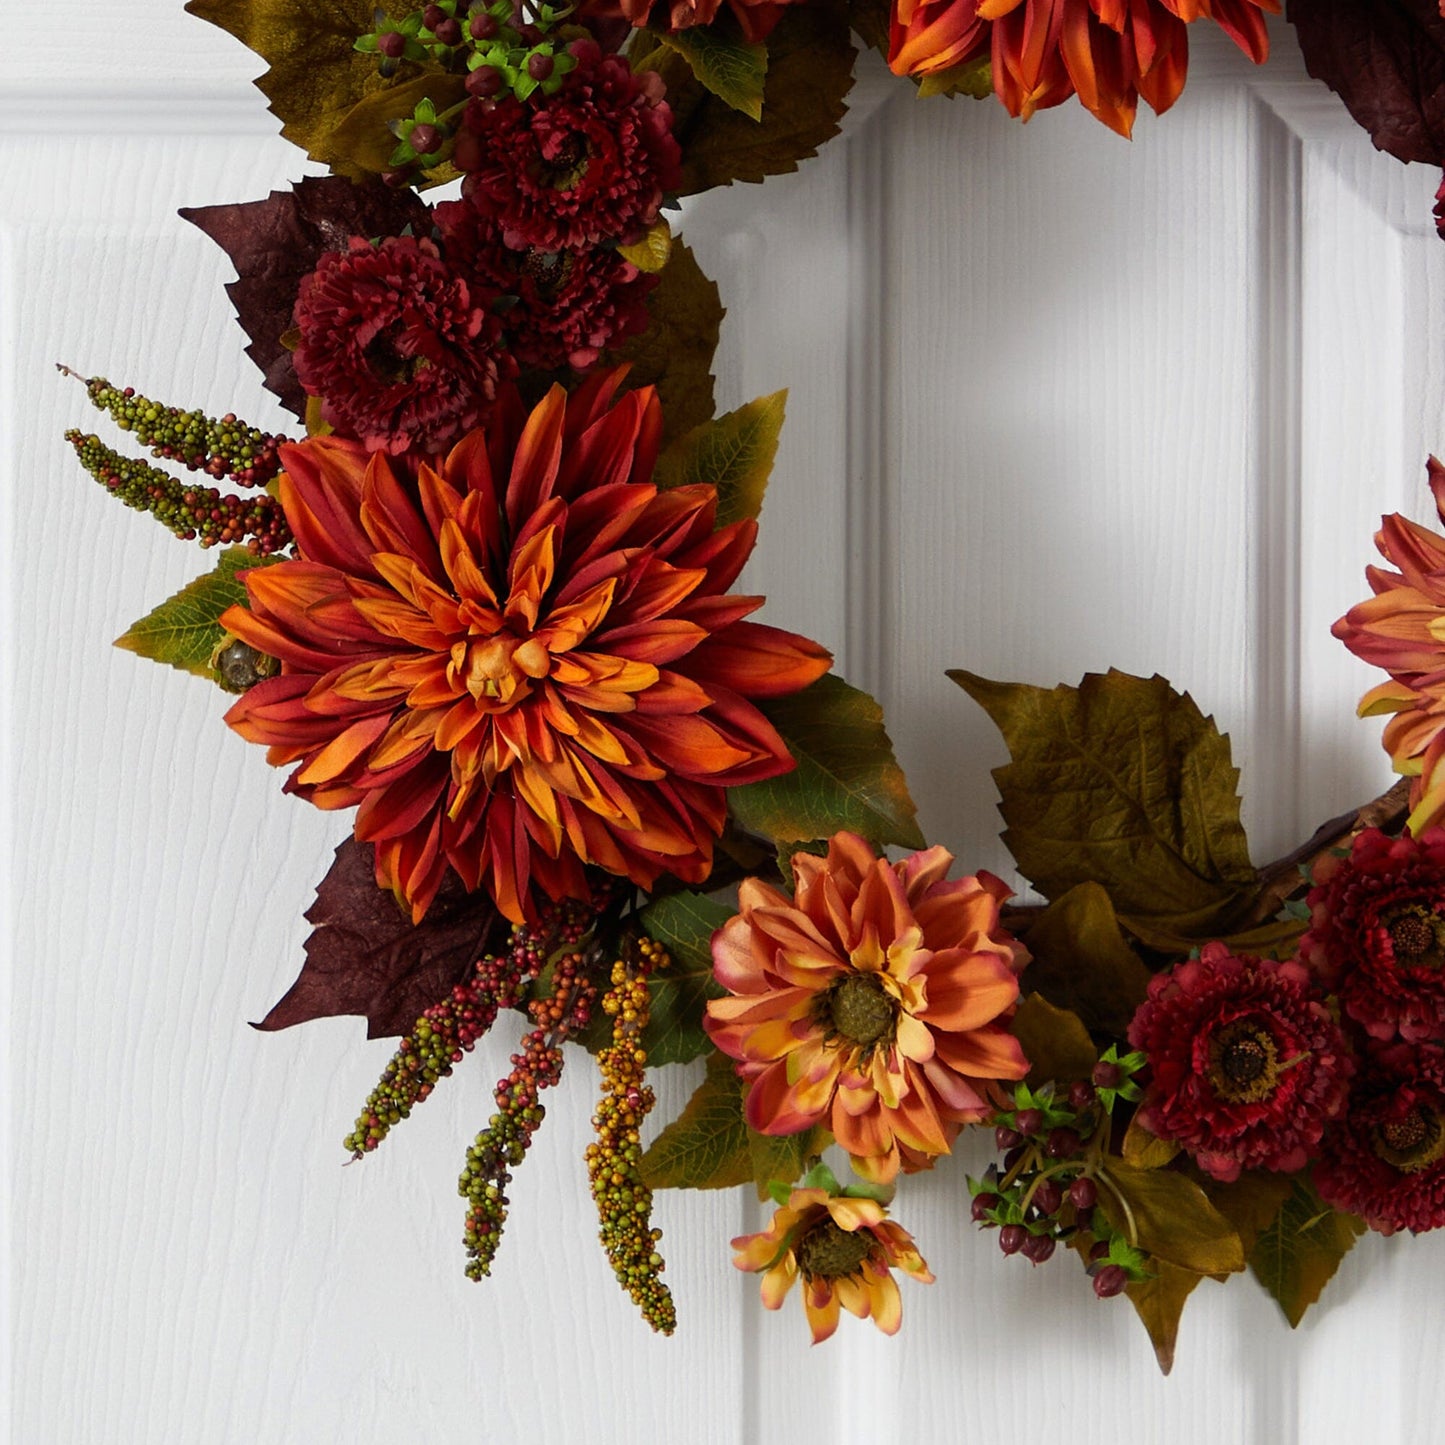 22” Dahlia & Mum Wreath - Autumn Beauty by Nearly Natural